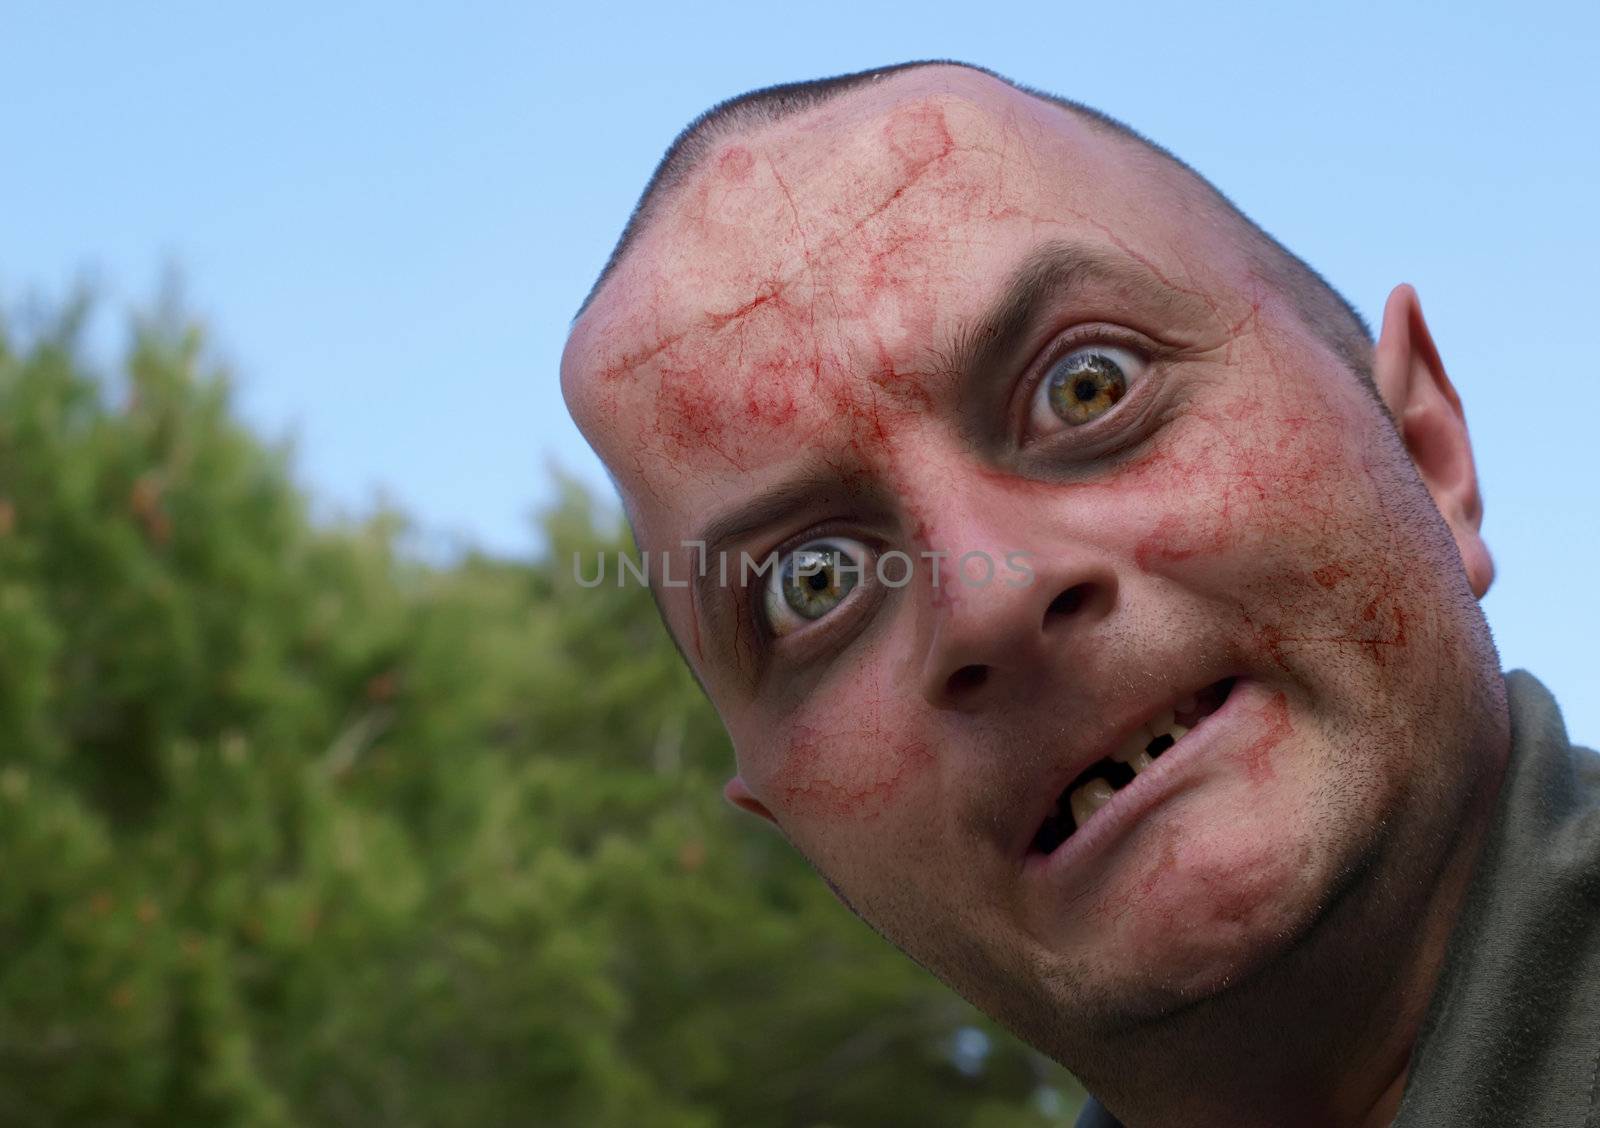 Male Zombie by PhotoWorks